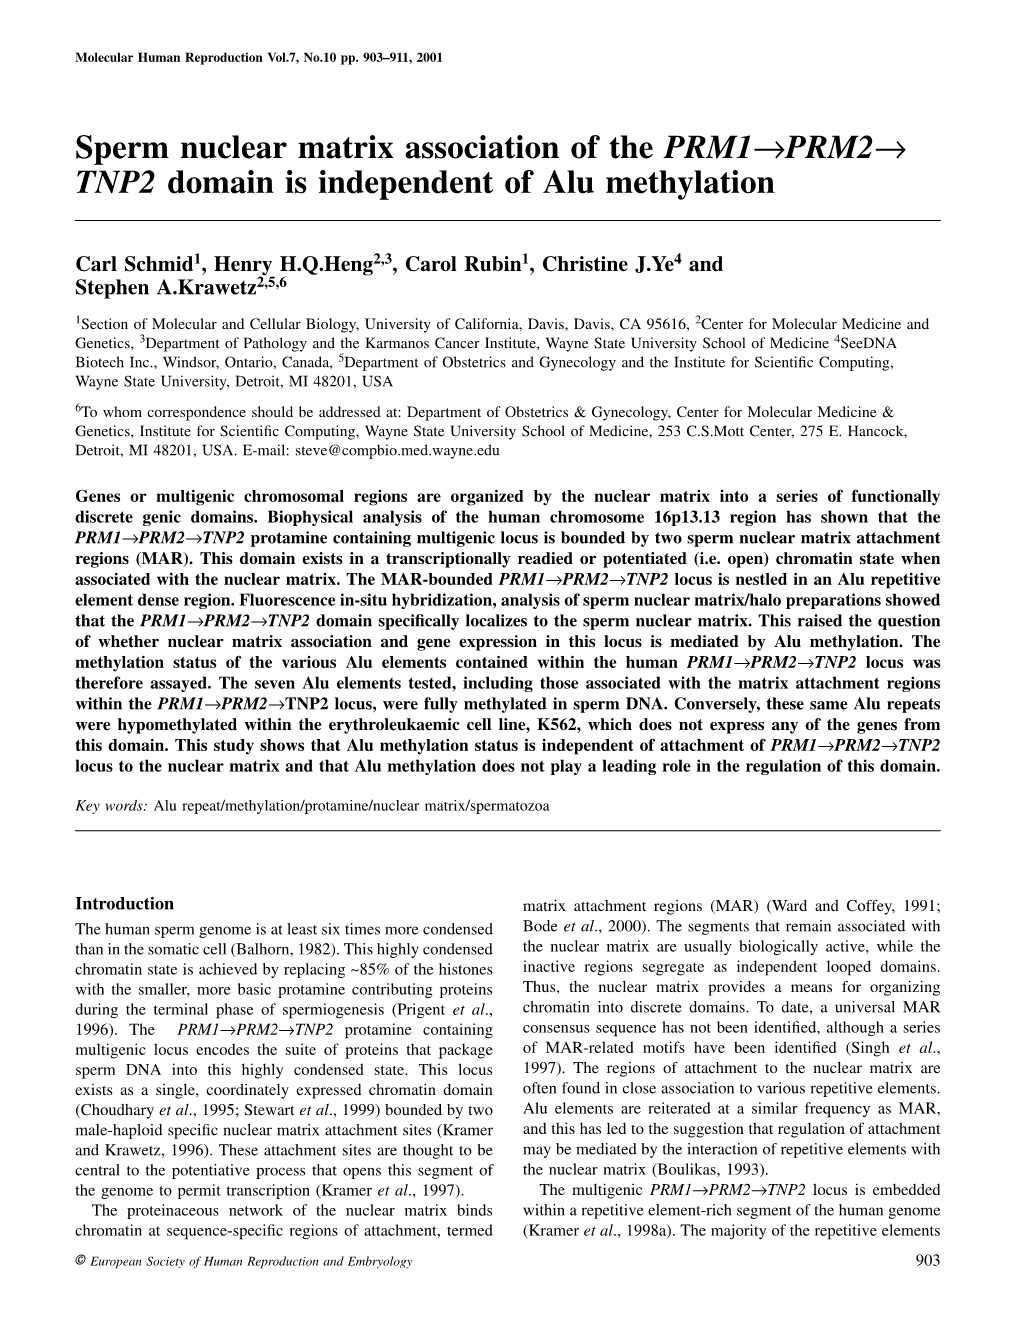 Sperm Nuclear Matrix Association of the PRM1→PRM2→ TNP2 Domain Is Independent of Alu Methylation